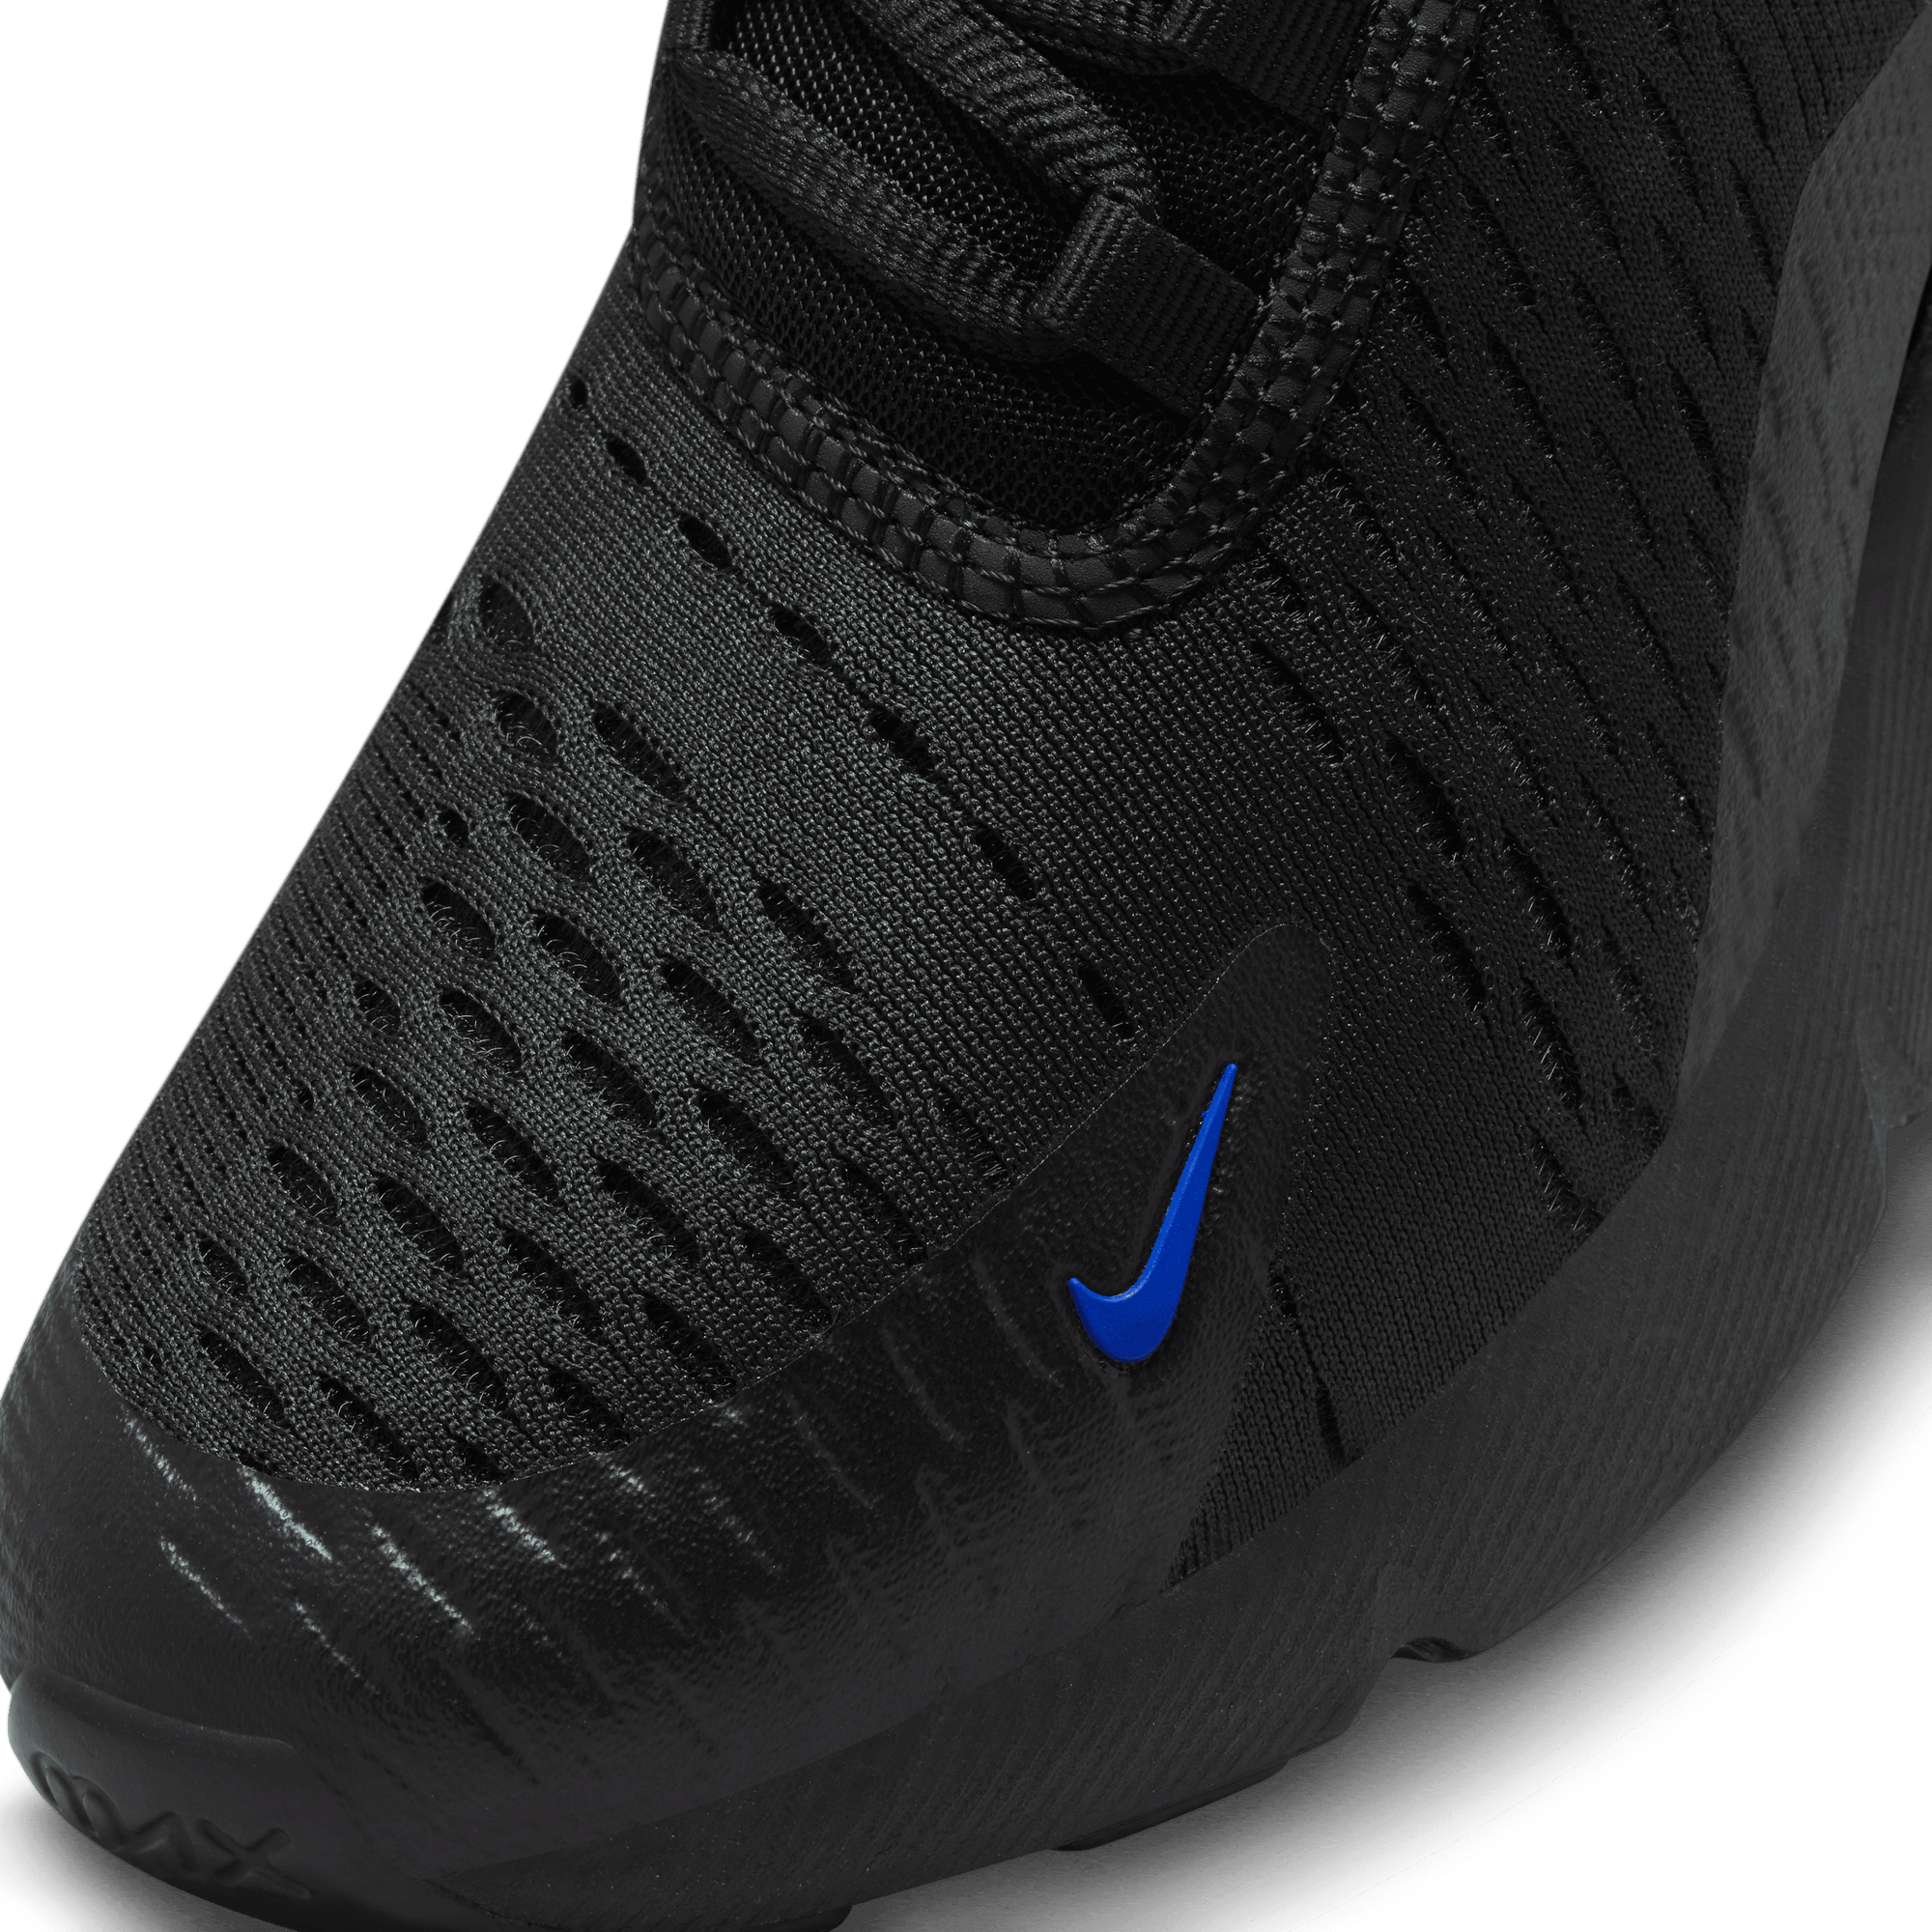 Nike GS Air Max 720 - Nohble